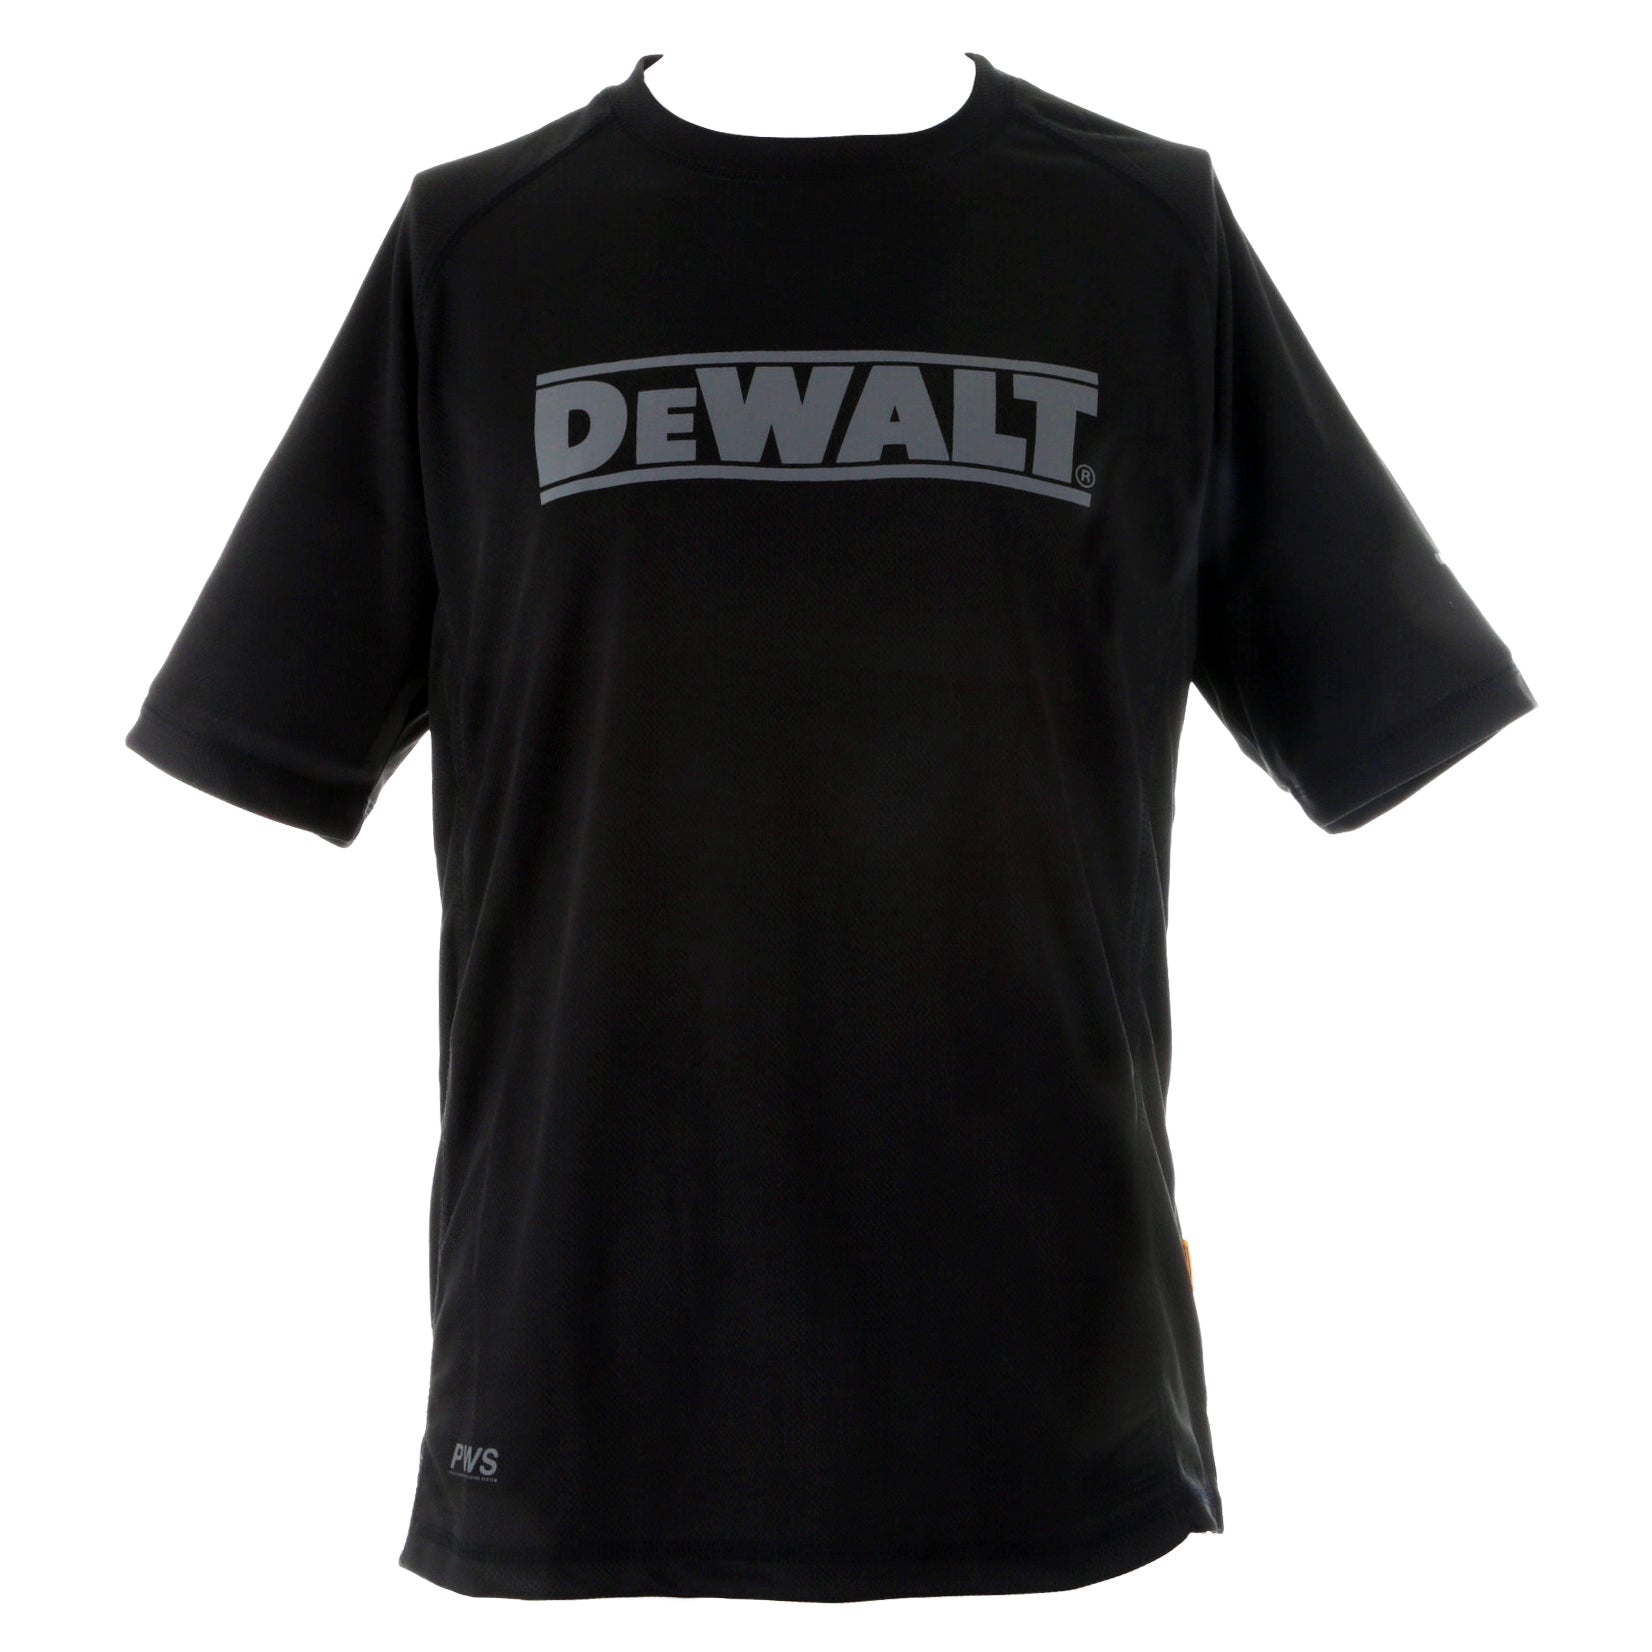 DeWalt Easton - Pws Performance T Shirt